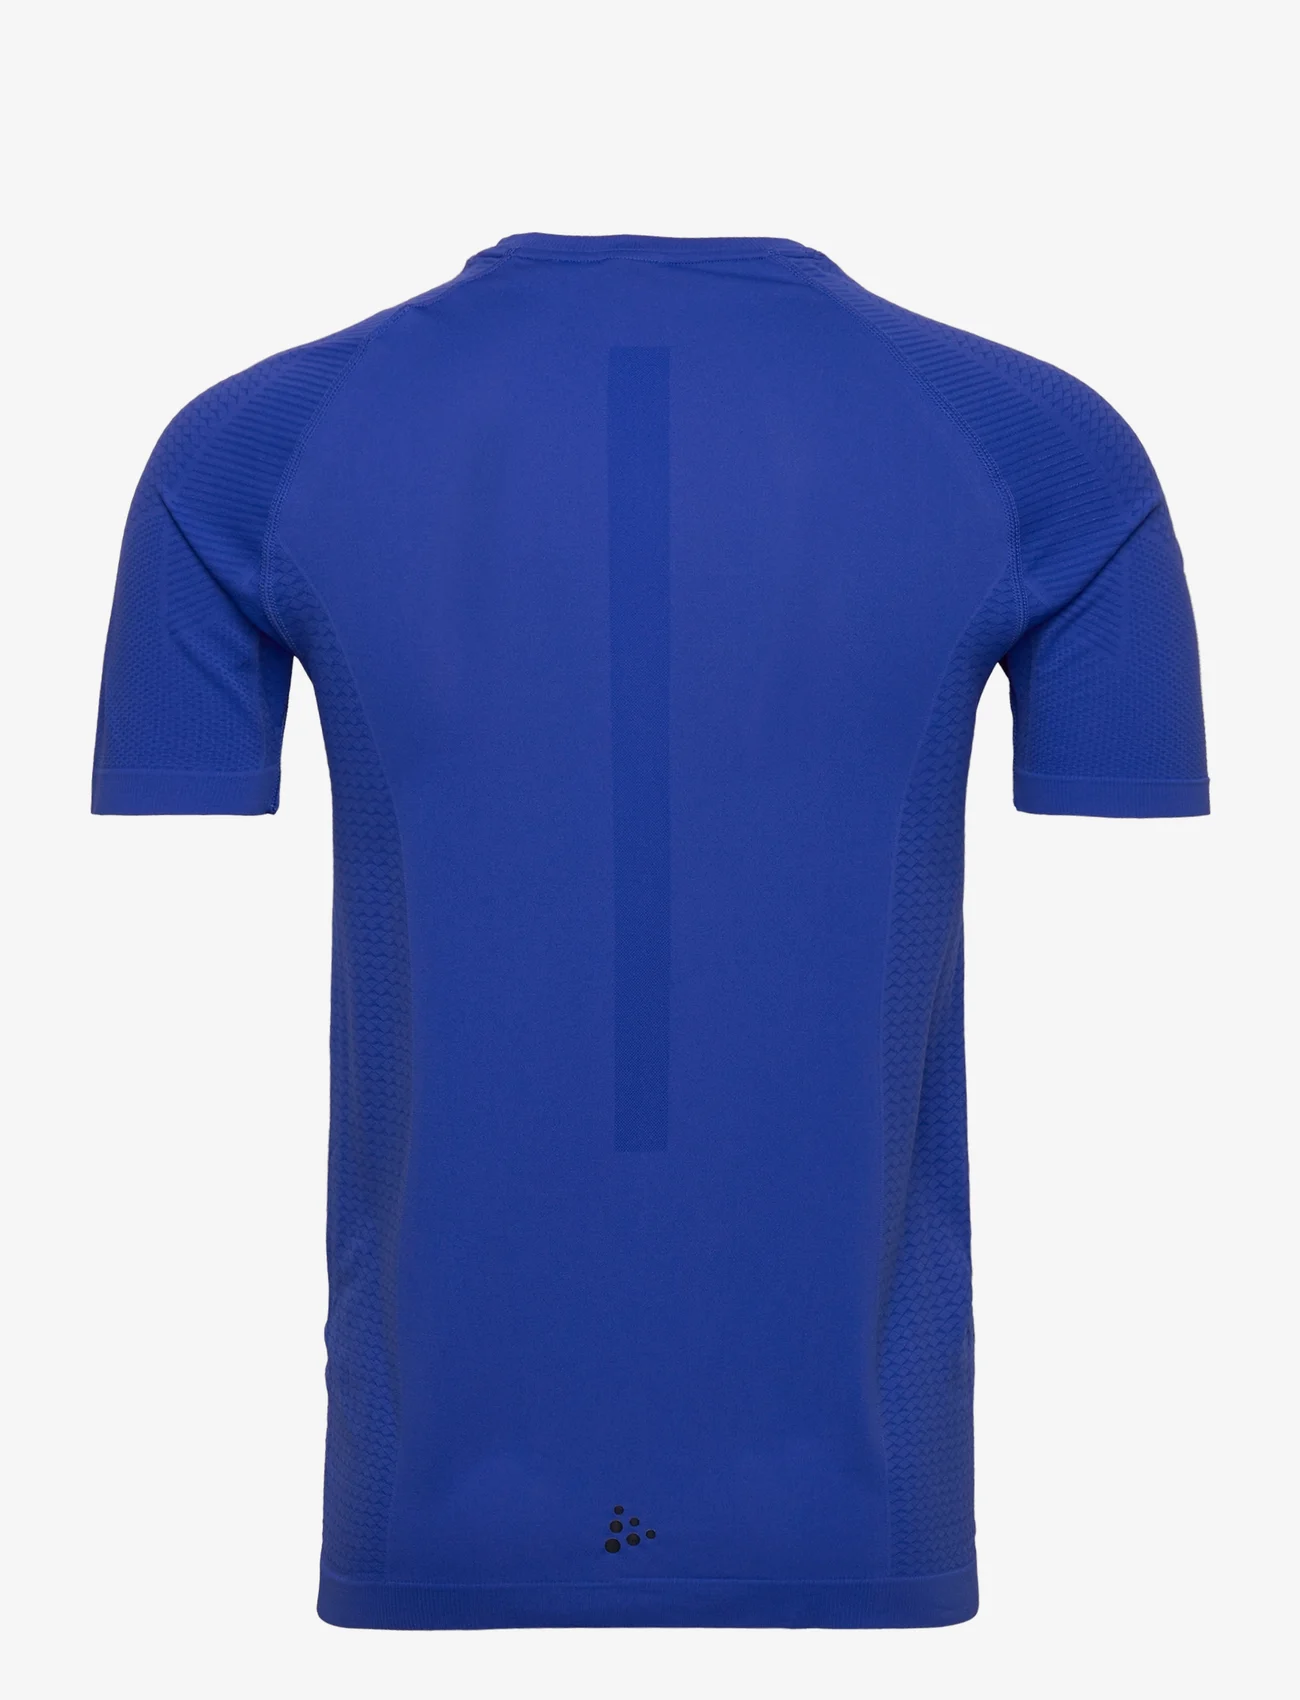 Craft - Adv Cool Intensity Ss Tee M - kortermede t-skjorter - ink blue - 1